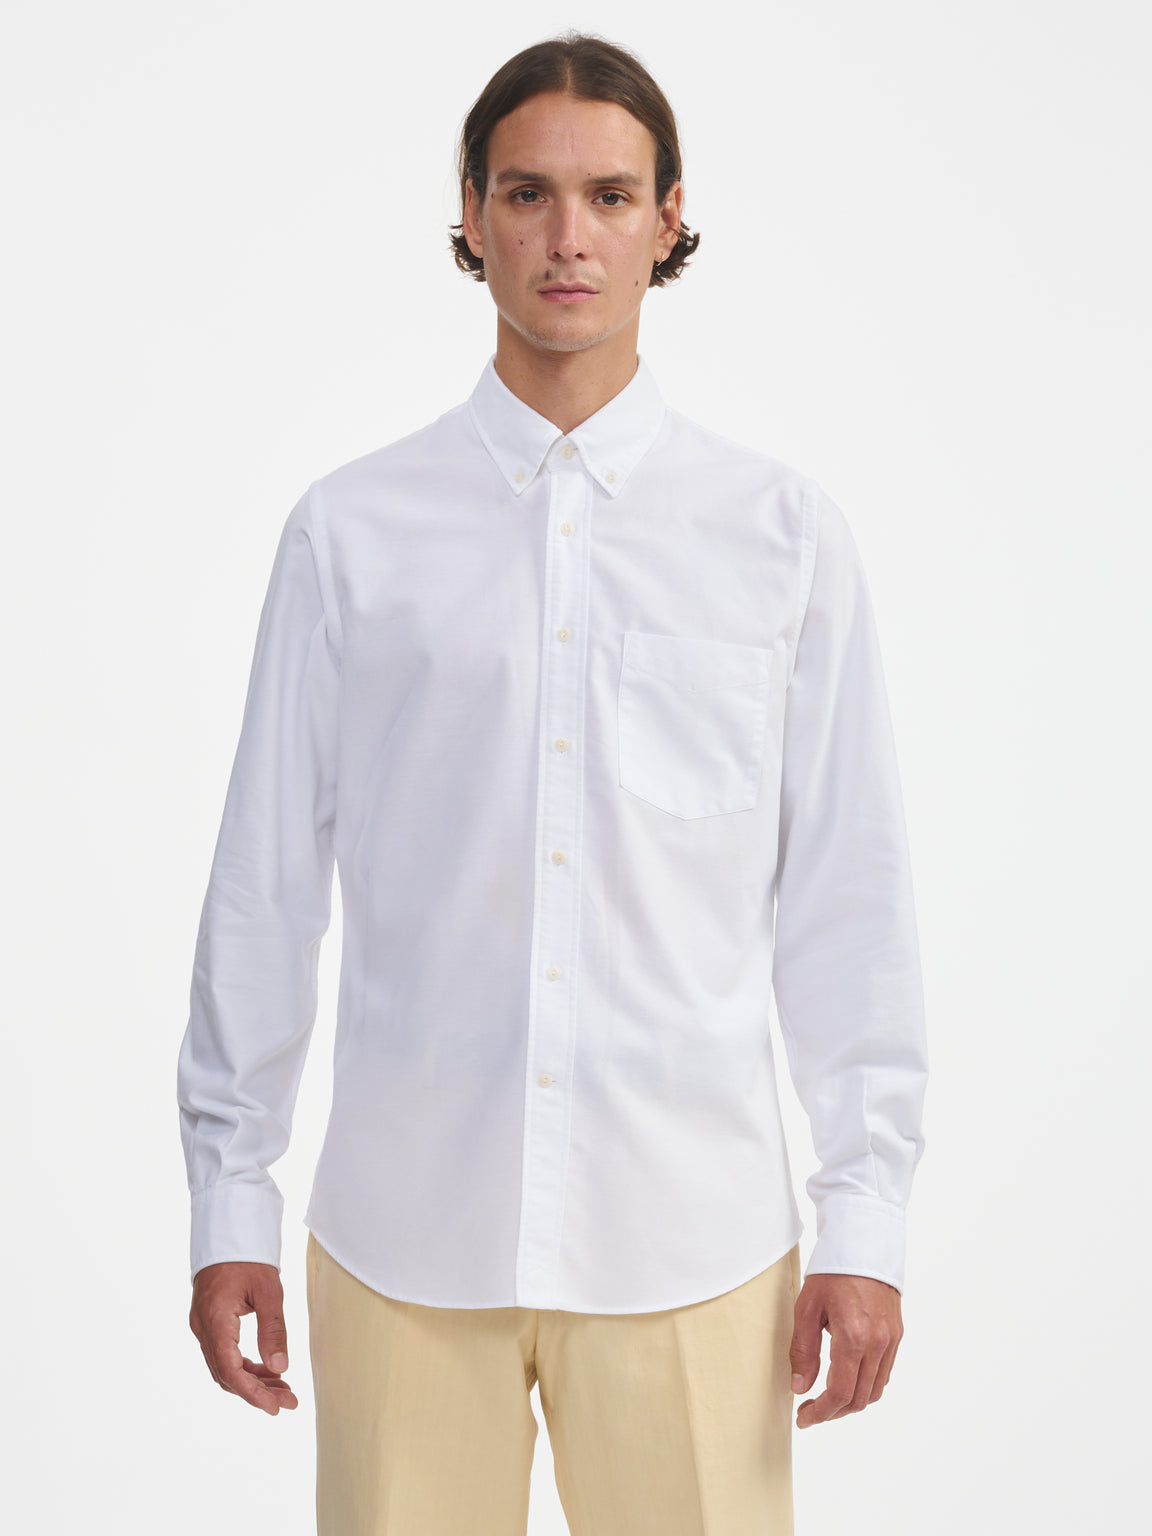 Mire Shirt - White | Men Collection | Bellerose